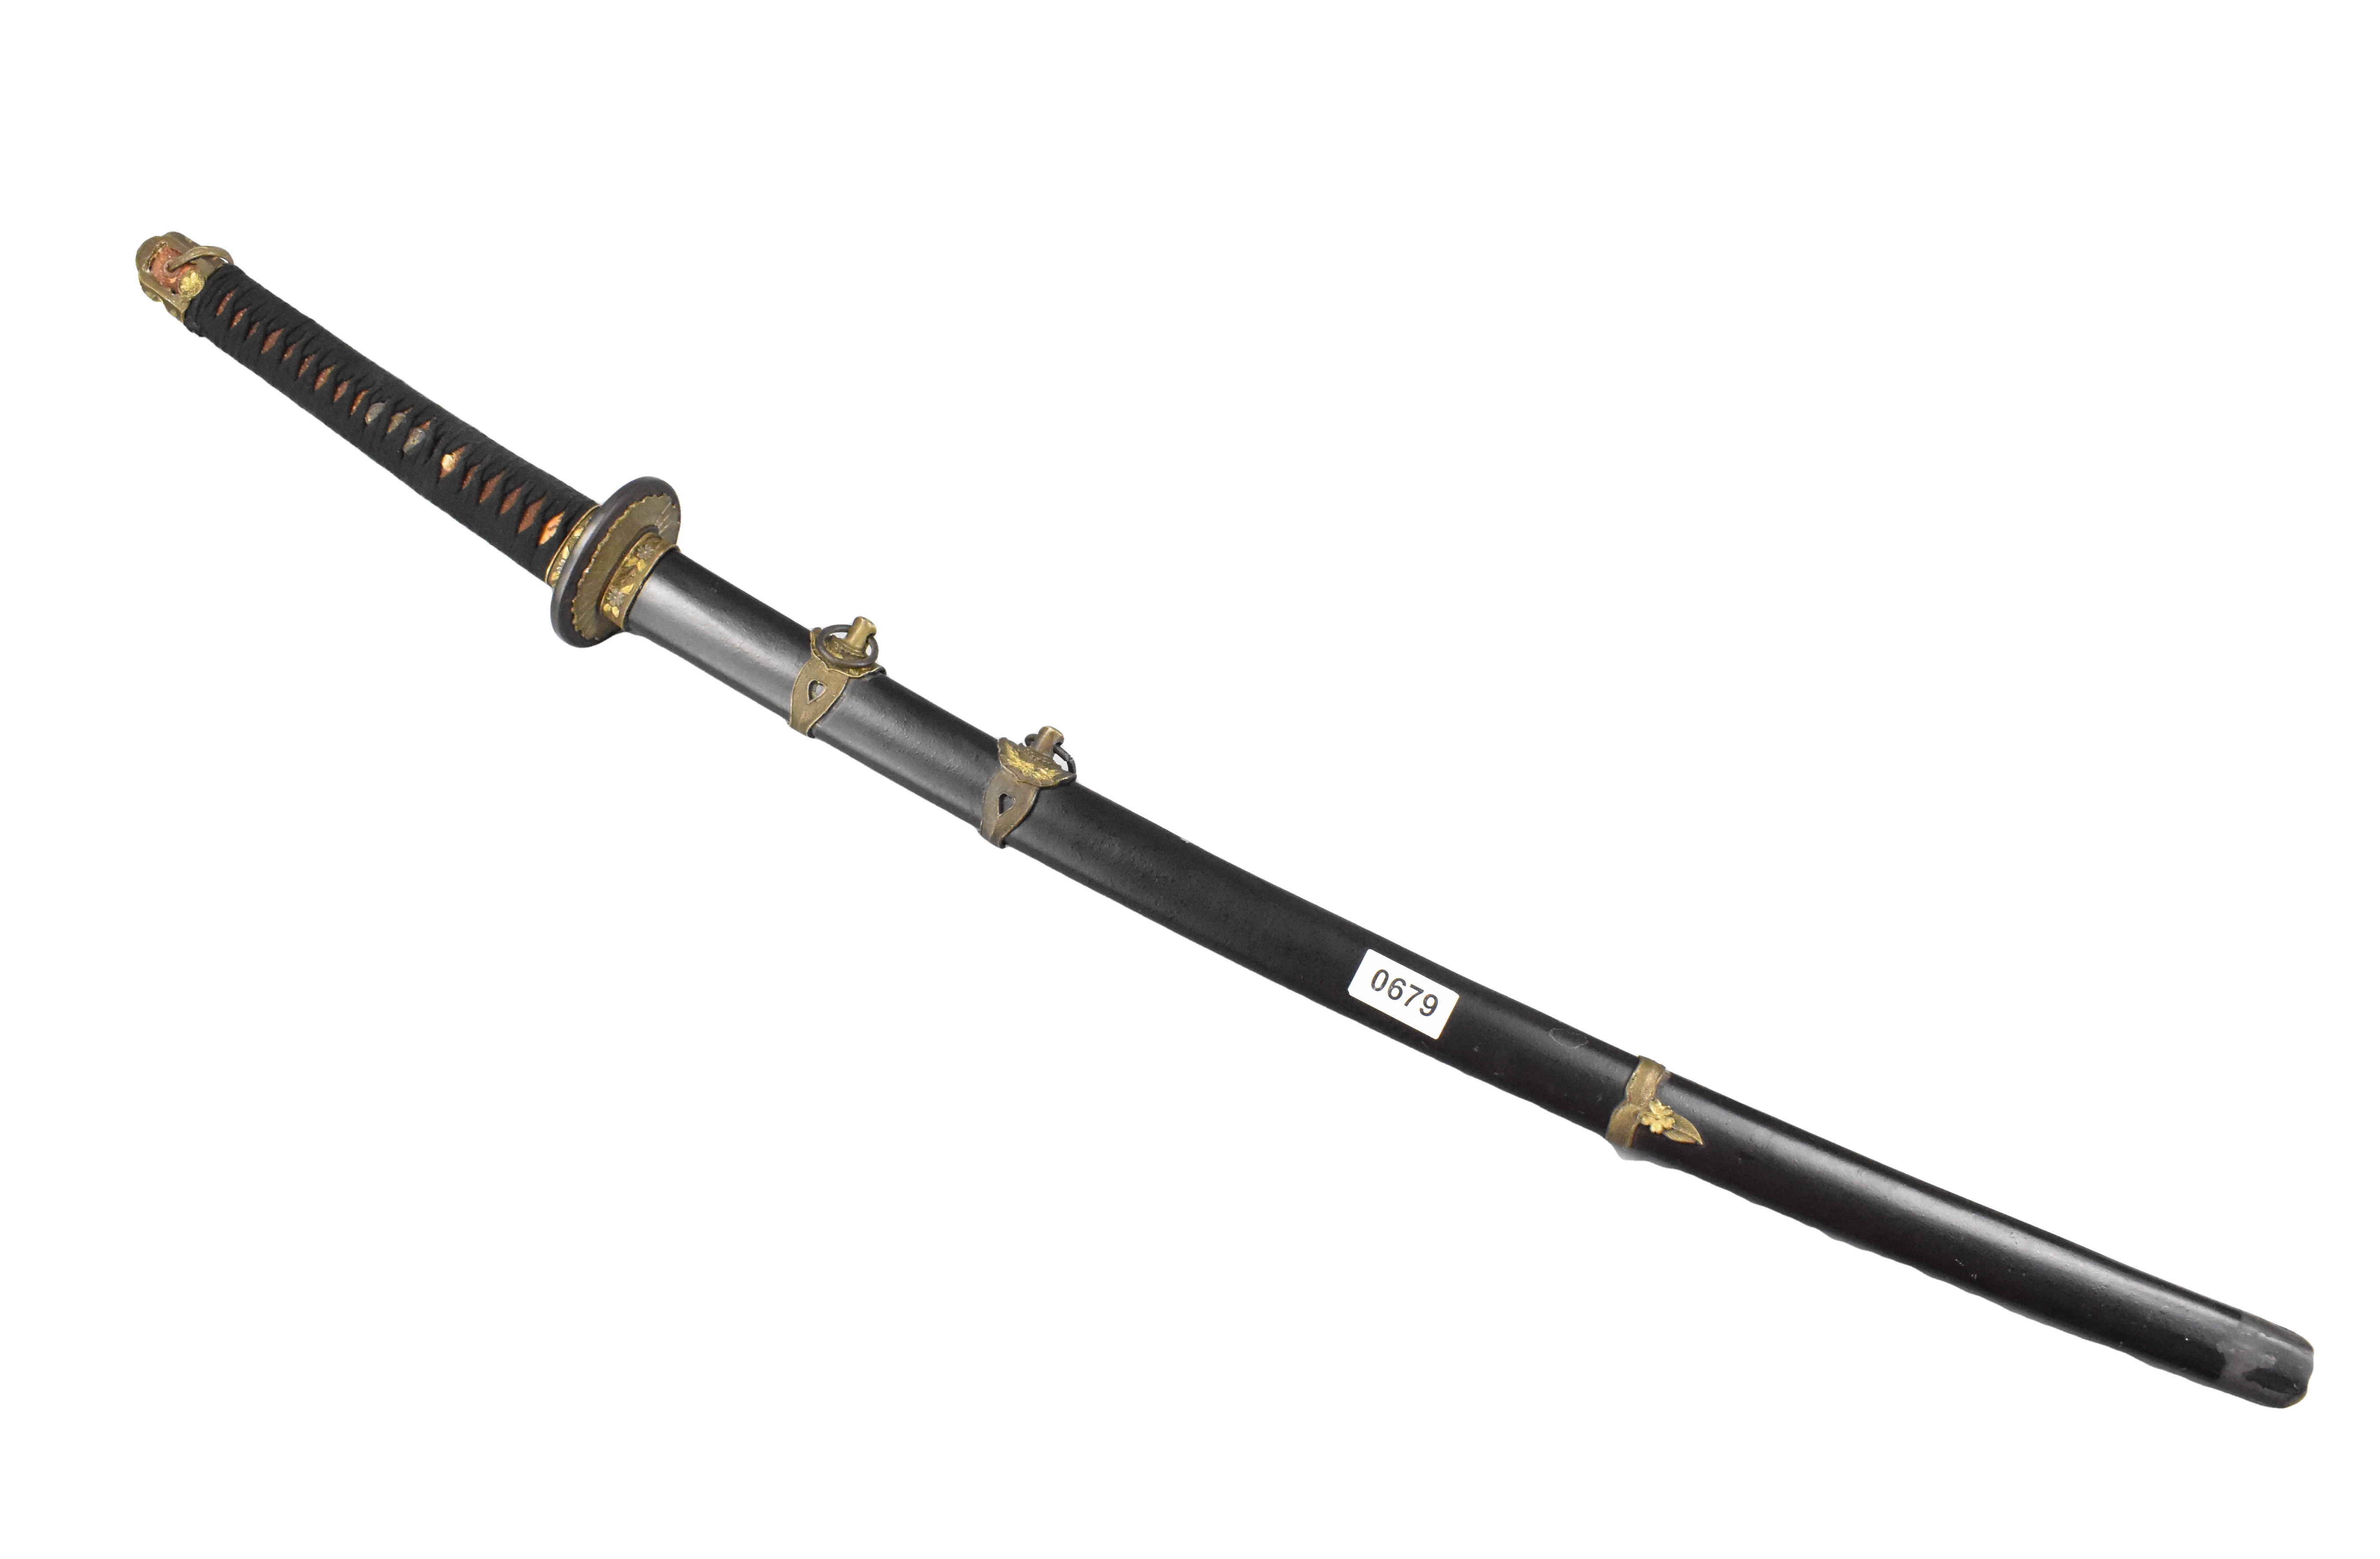 JAPANESE SAMURAI SWORD A Japanese